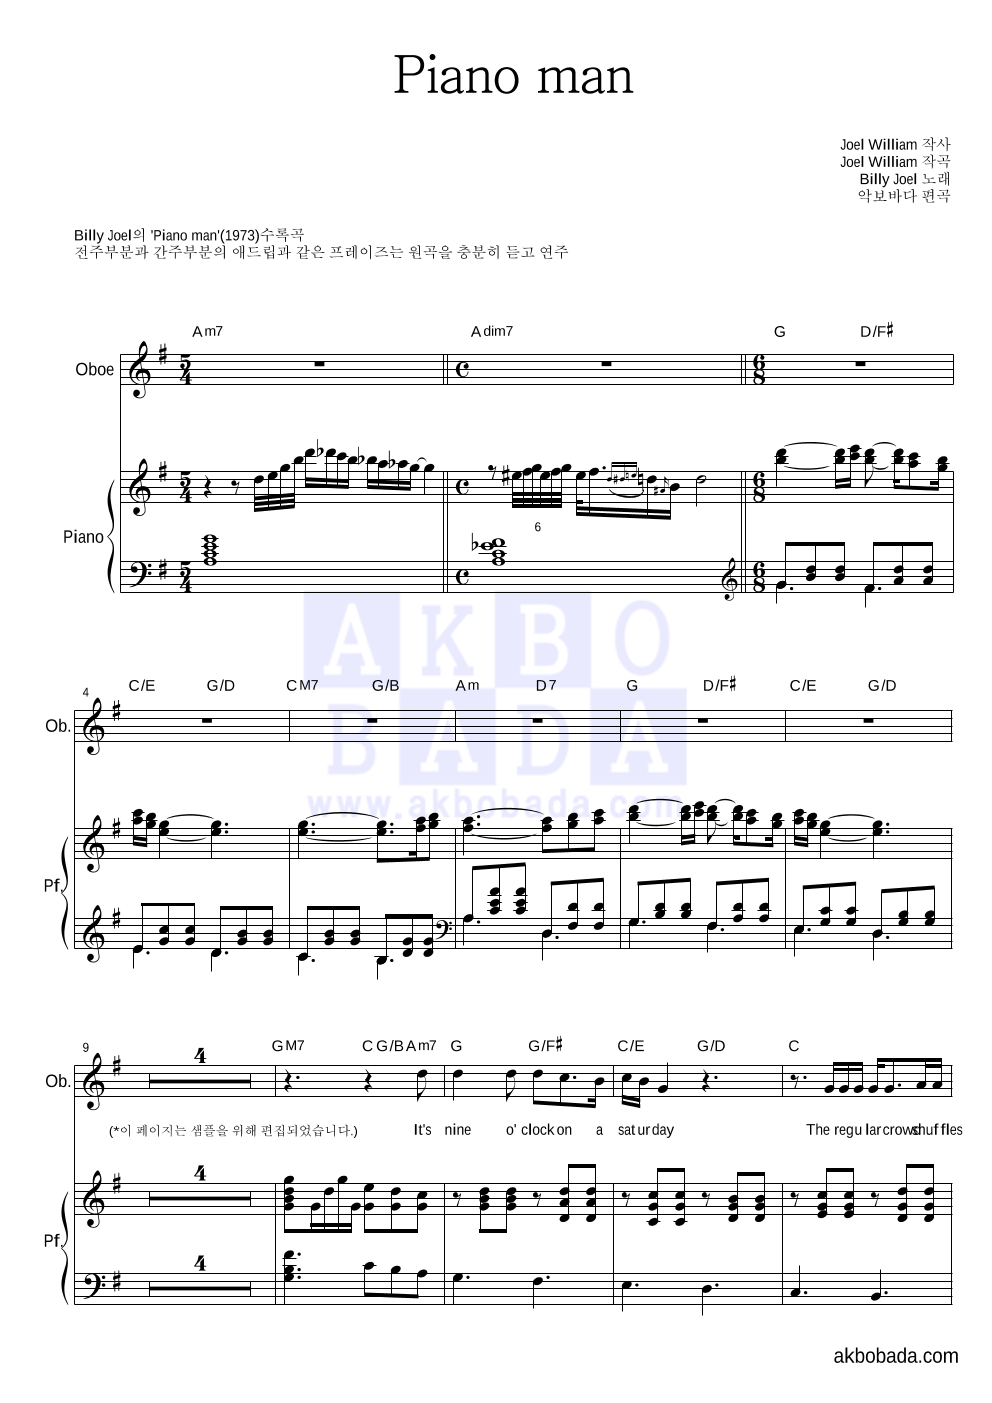 Billy Joel - Piano man 오보에&피아노 악보 